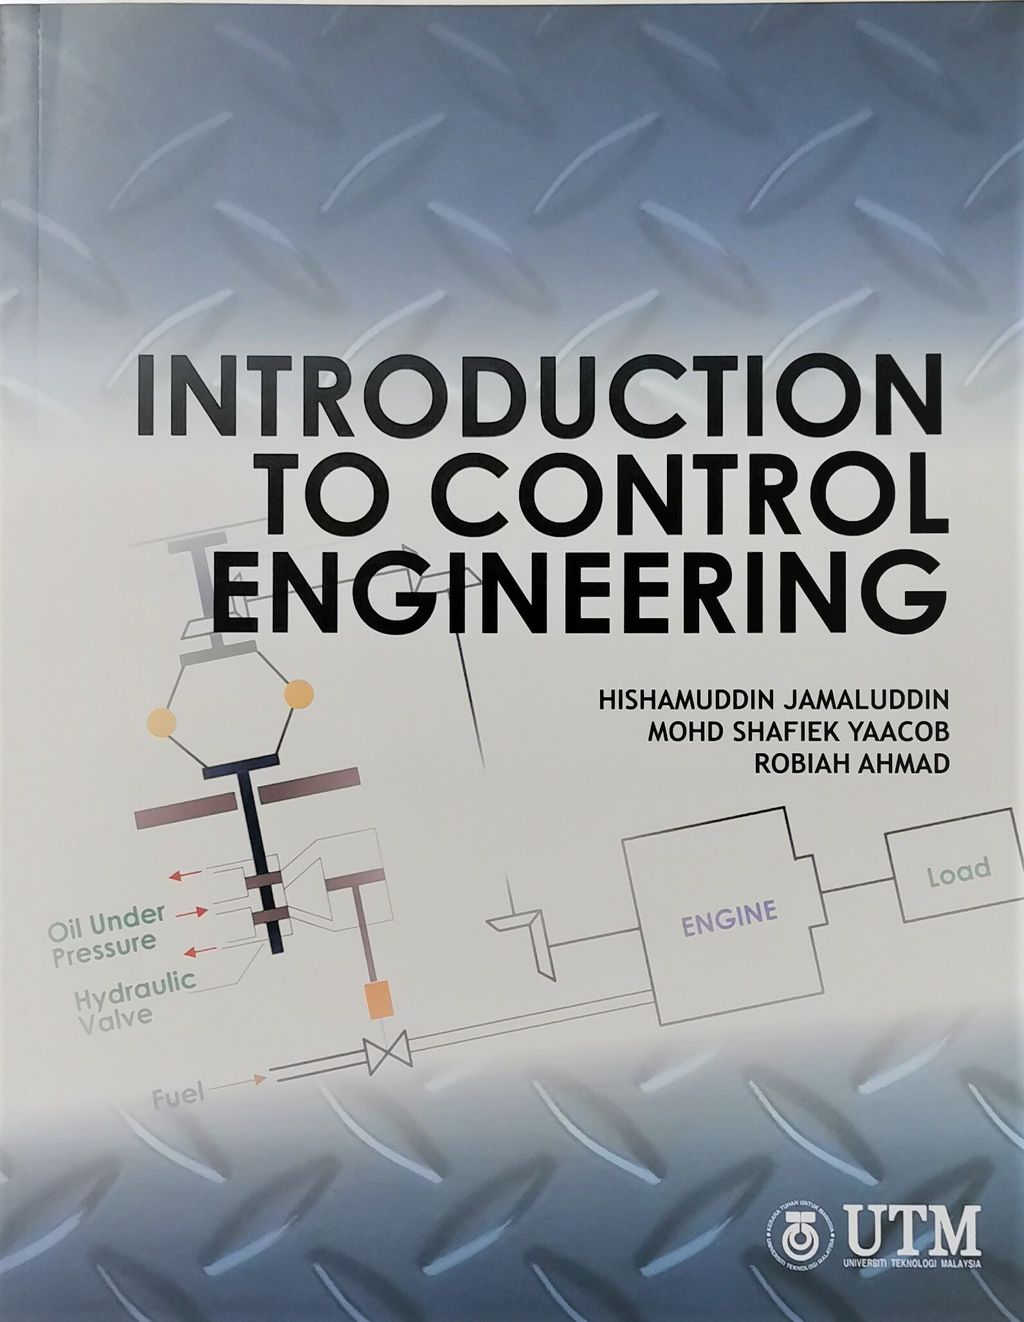 Introduction to Engineering SKM.jpg